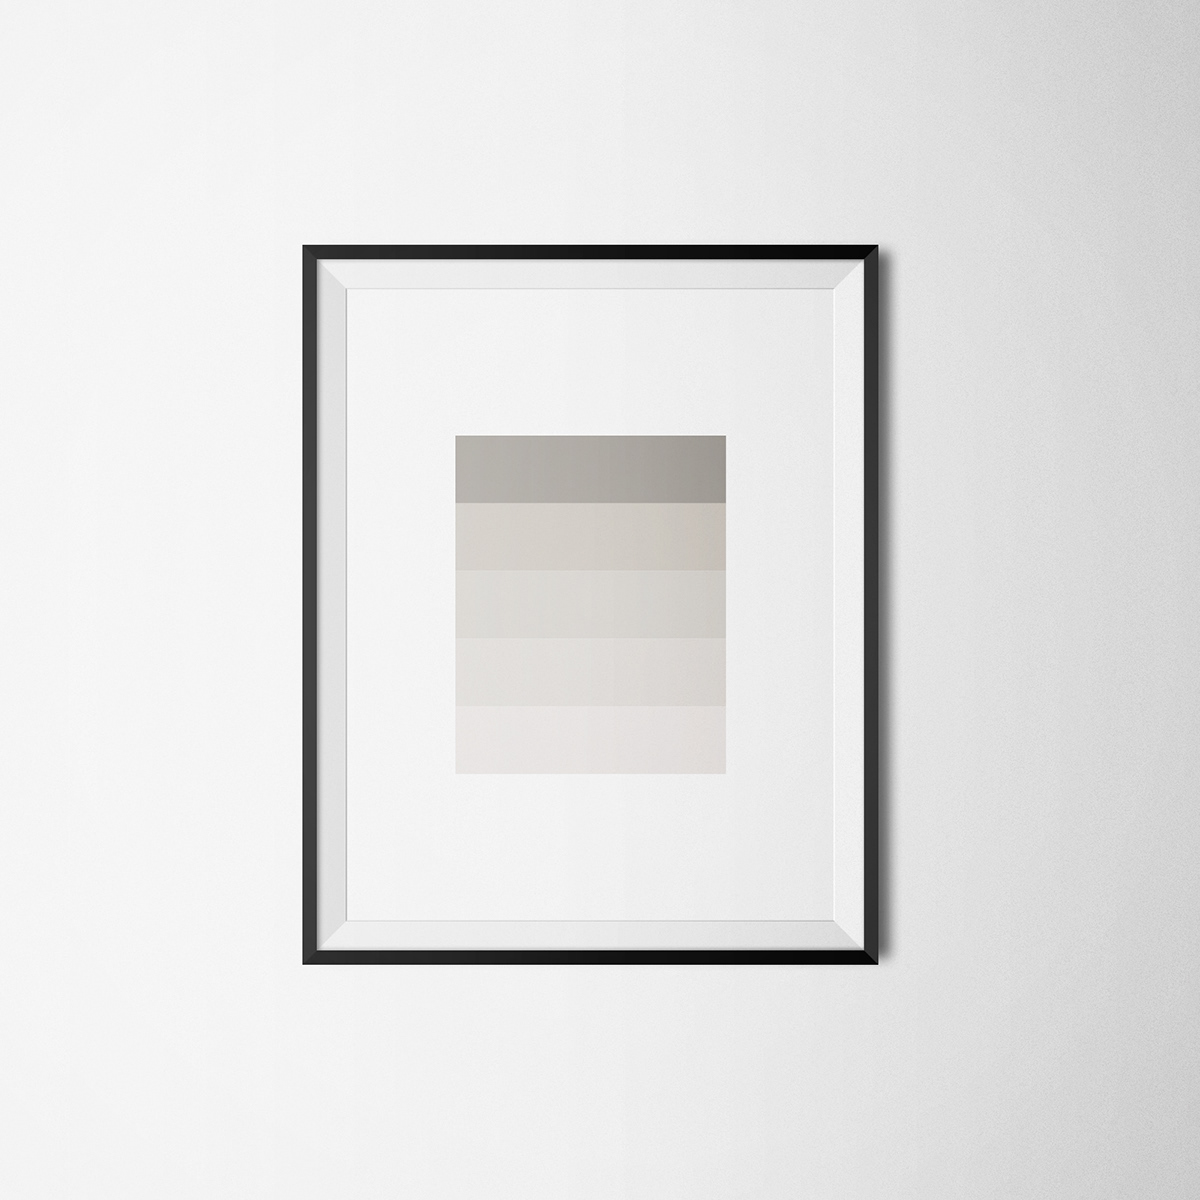 fifty Shades grey range scale simple geometric